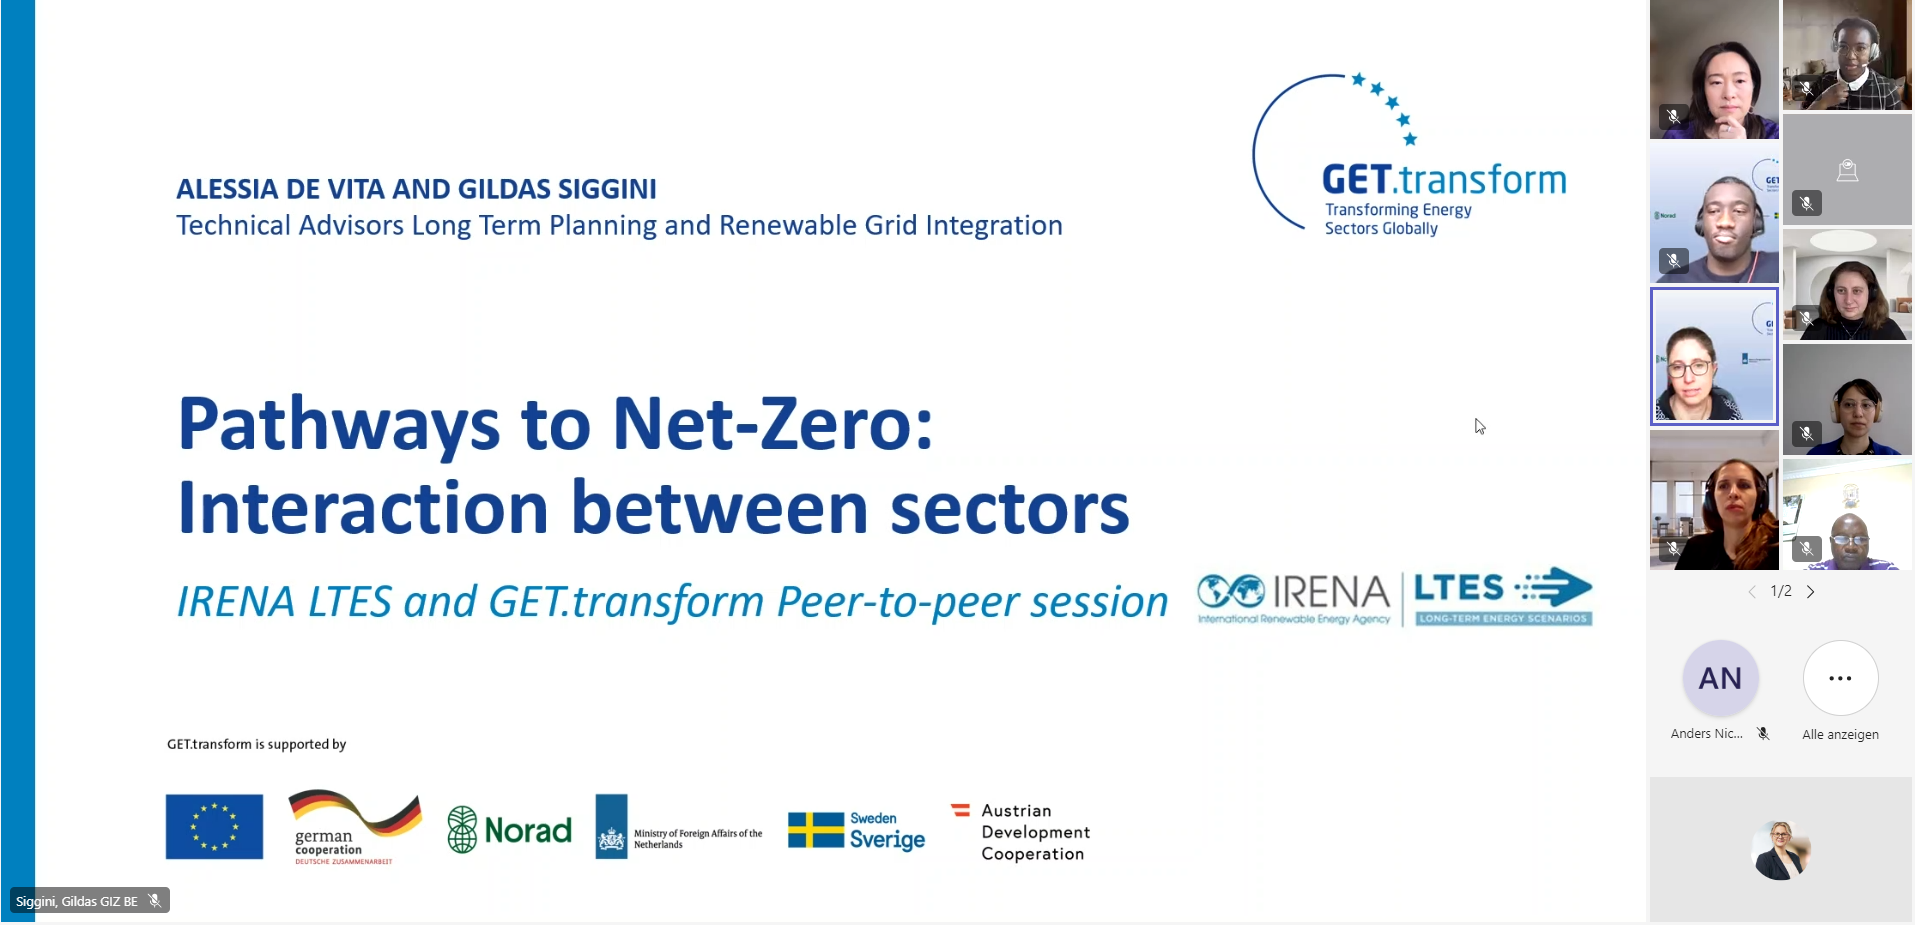 Alessia De Vita and Gildas Siggini, Technical Advisors at GET.transform, presenting in Irena LTES peer-to-peer session,pathways to net-zero